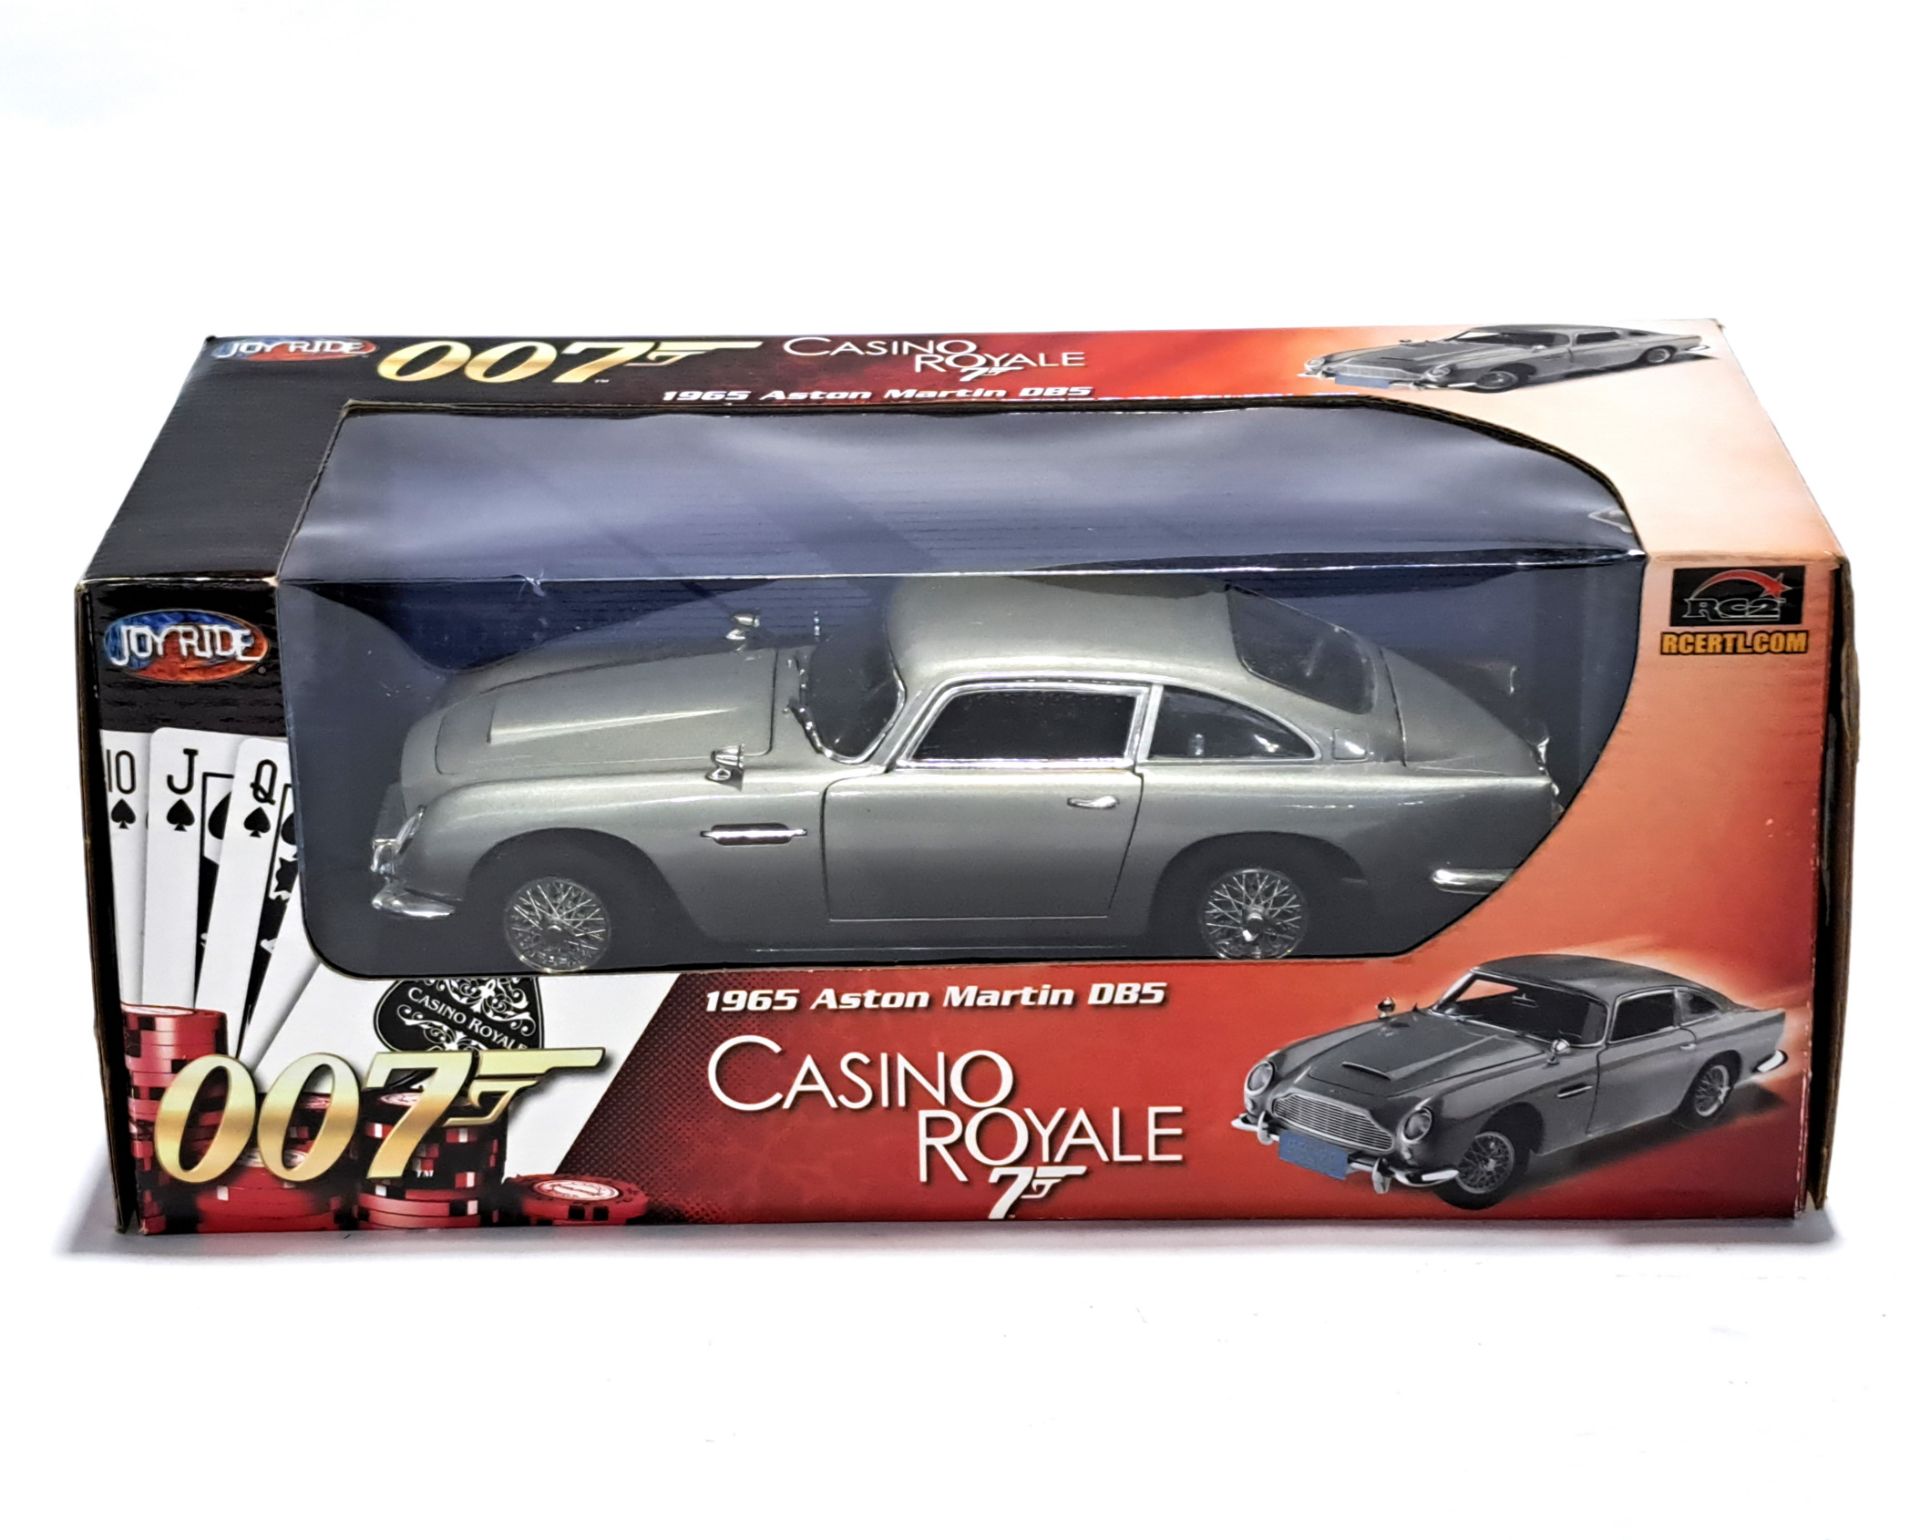 Joyride / RC2 1:18th scale James Bond 007 1965 Aston Martin DB5